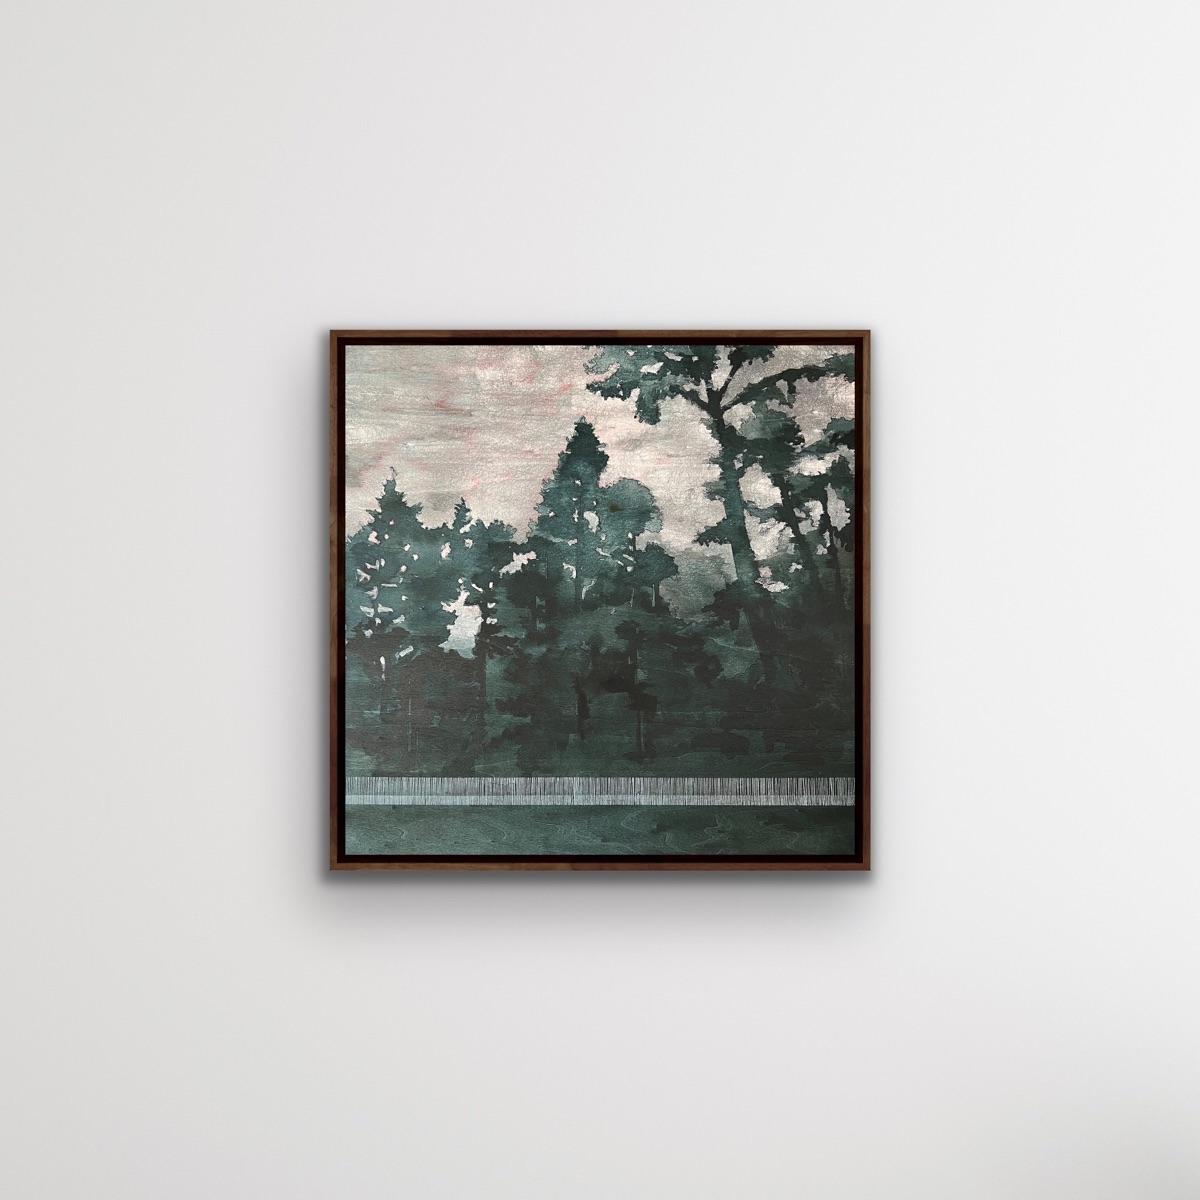 Wood for Trees, Rebecca Tucker, Original landscape painting, Contemporary art - Black Figurative Painting by Rebecca Tucker 